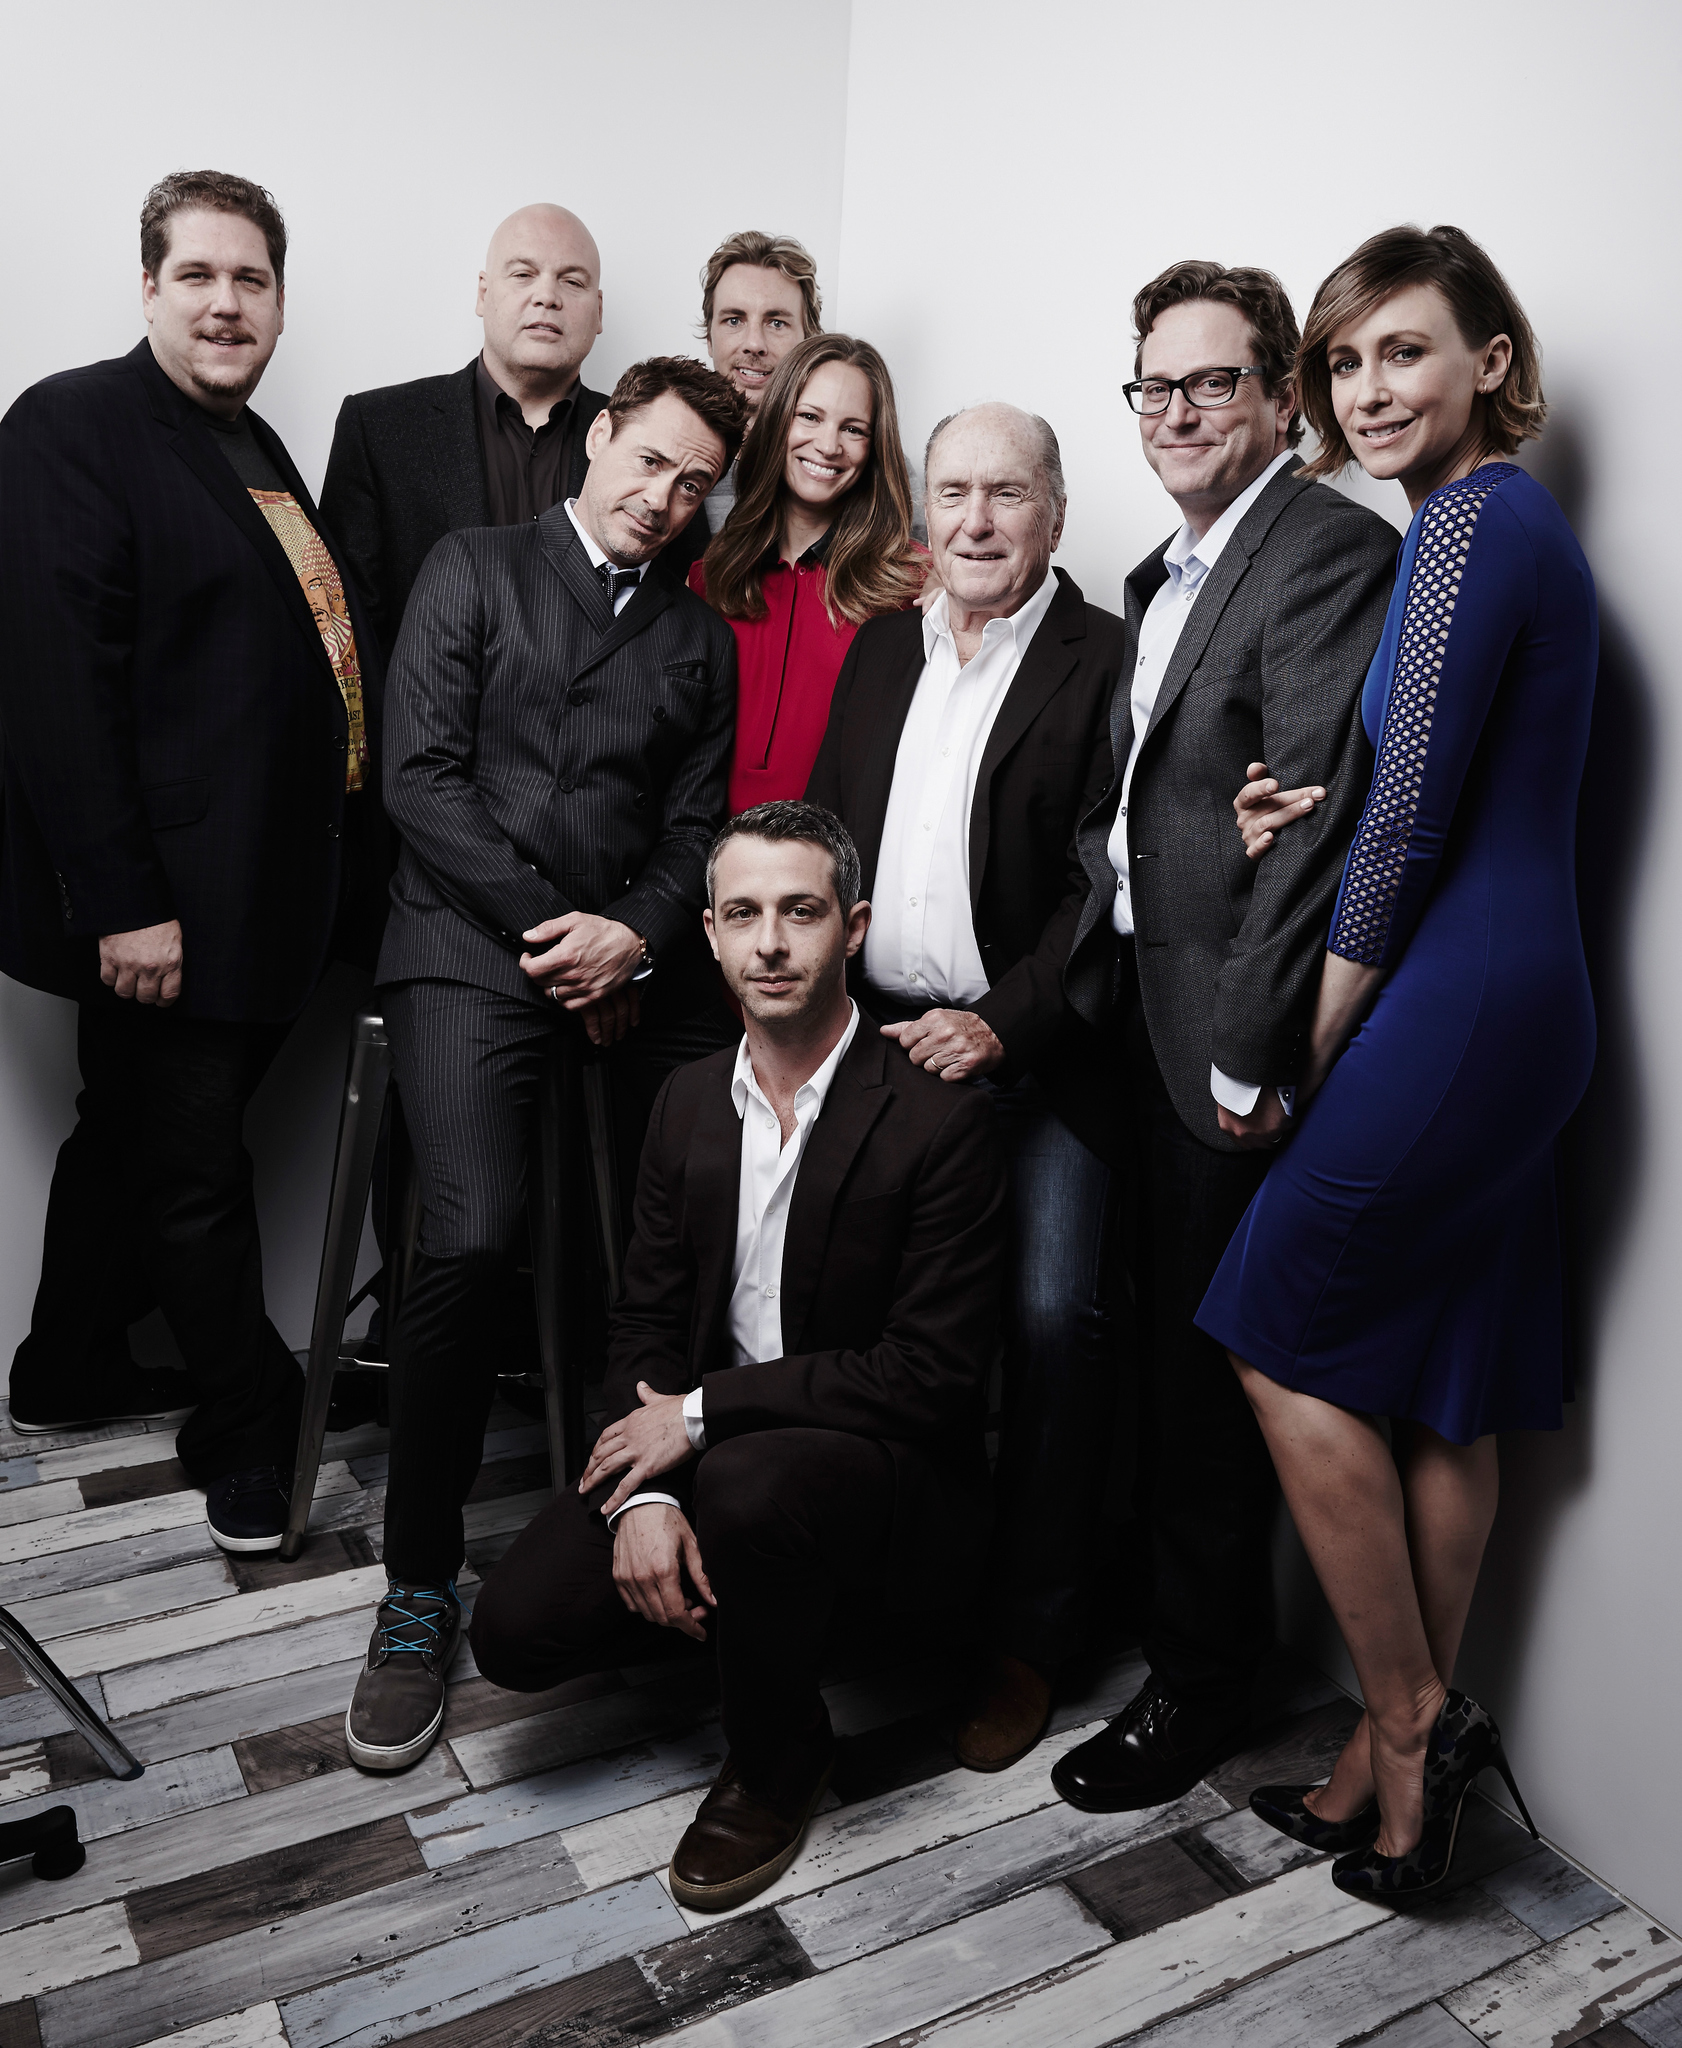 Vincent D'Onofrio, Robert Downey Jr., Robert Duvall, David Dobkin, Vera Farmiga, Dax Shepard and Susan Downey at event of Teisejas (2014)